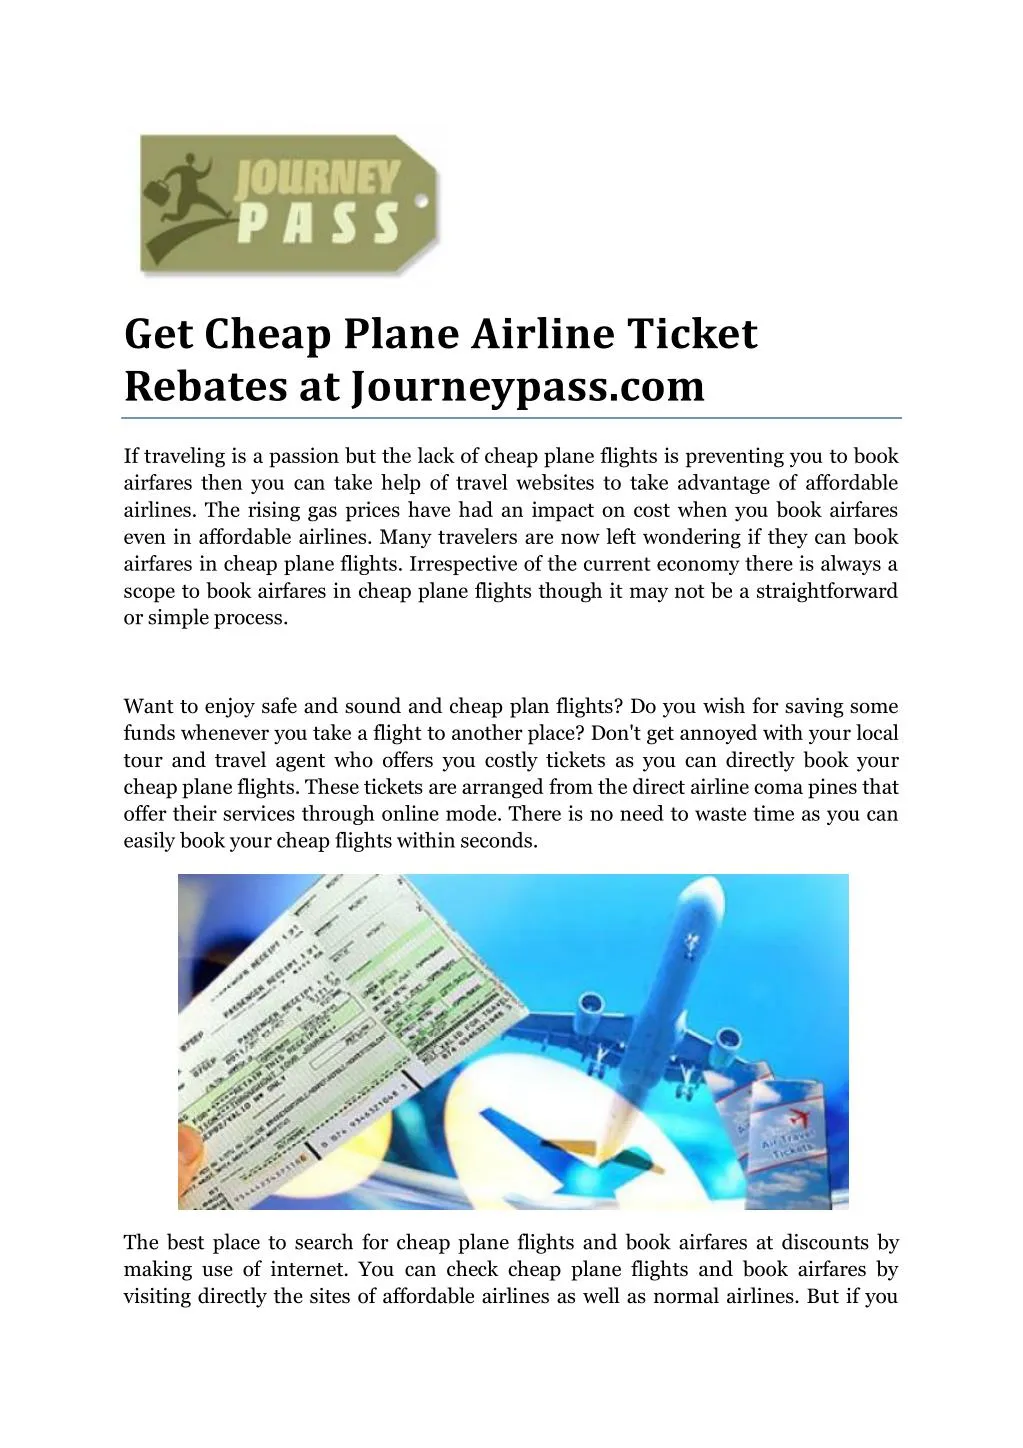 PPT Get Cheap Plane Airline Ticket Rebates At Journeypass 